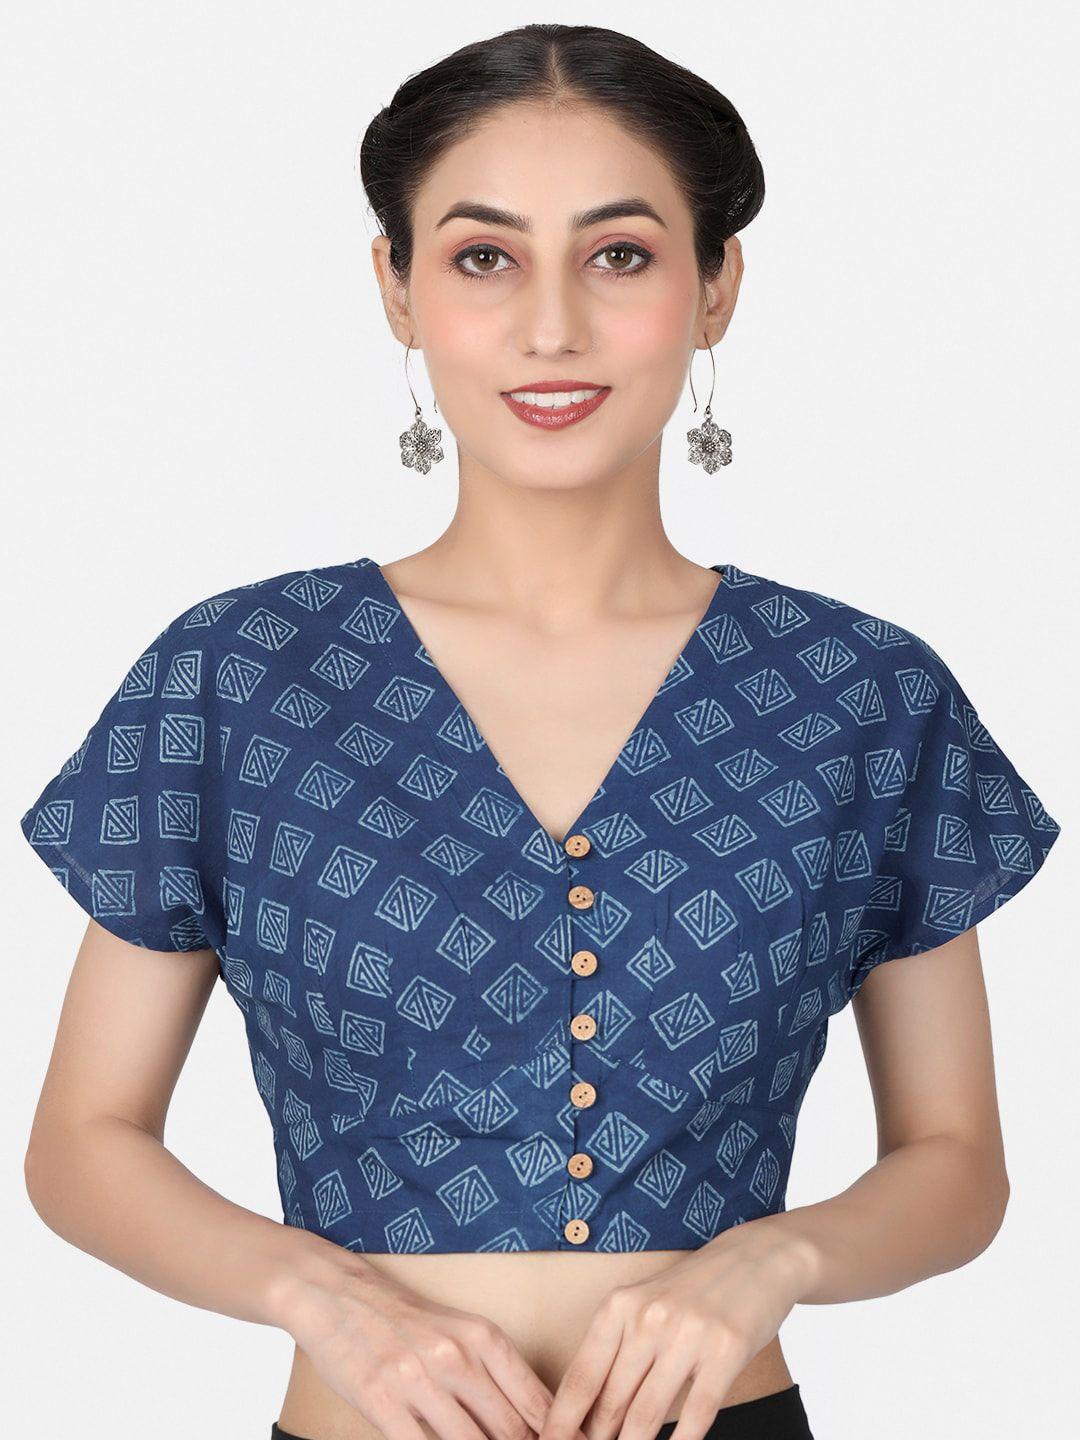 llajja printed pure cotton readymade saree blouse